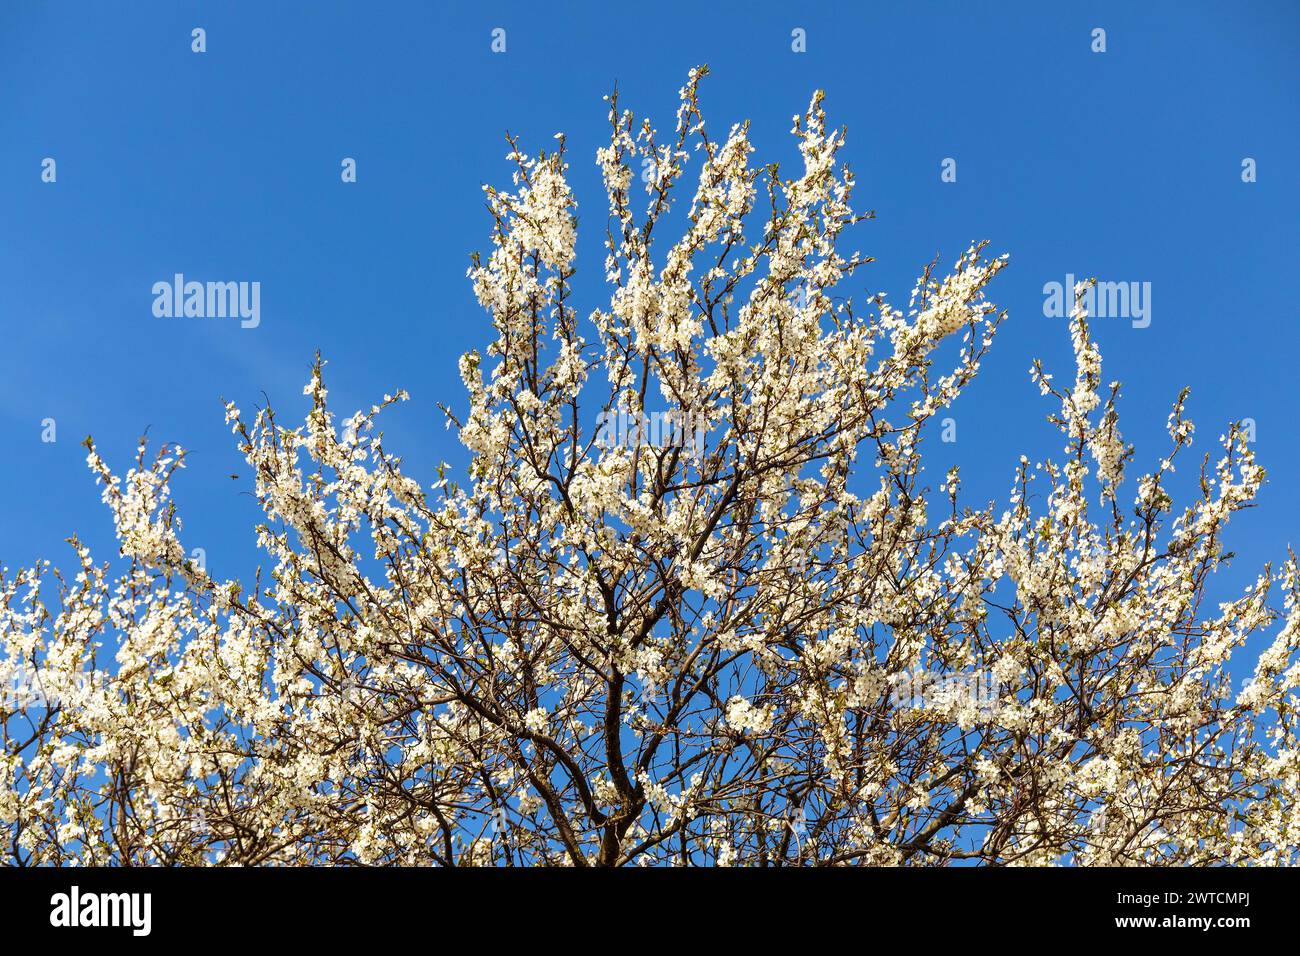 white flowering blackthorn bush or tree on blue sky background, springtime view Stock Photo